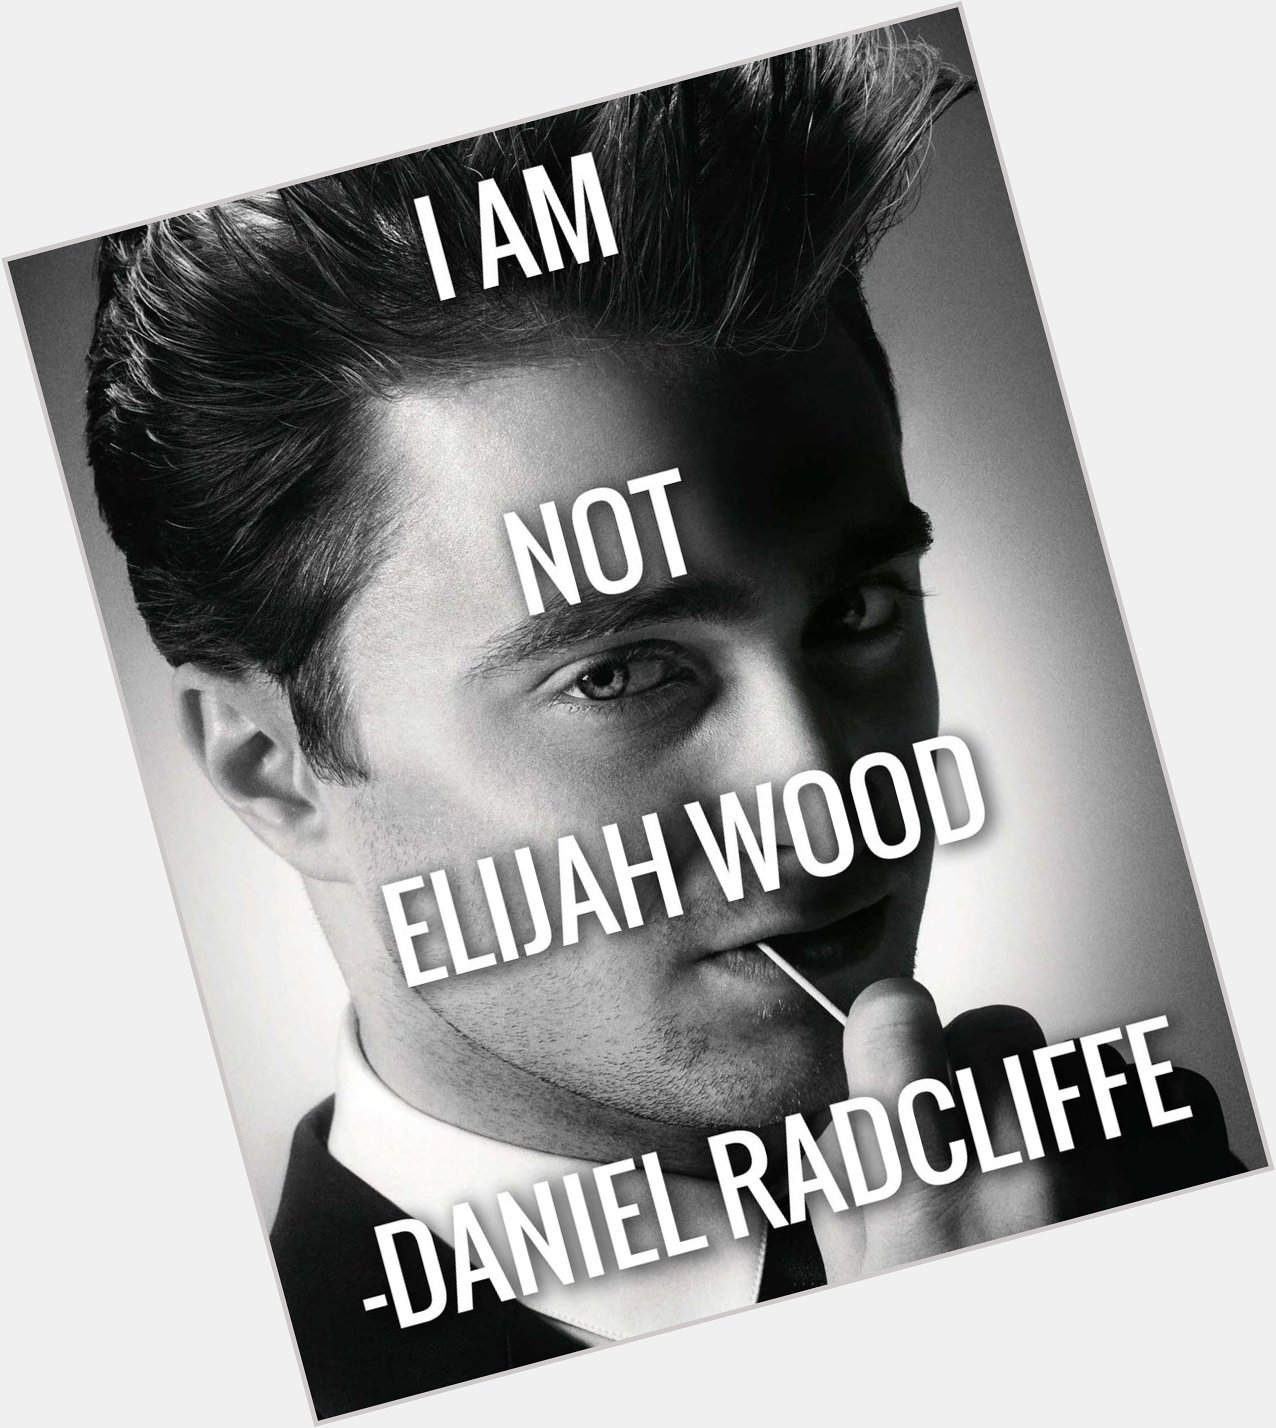 Happy 39th birthday to Elijah Wood! 